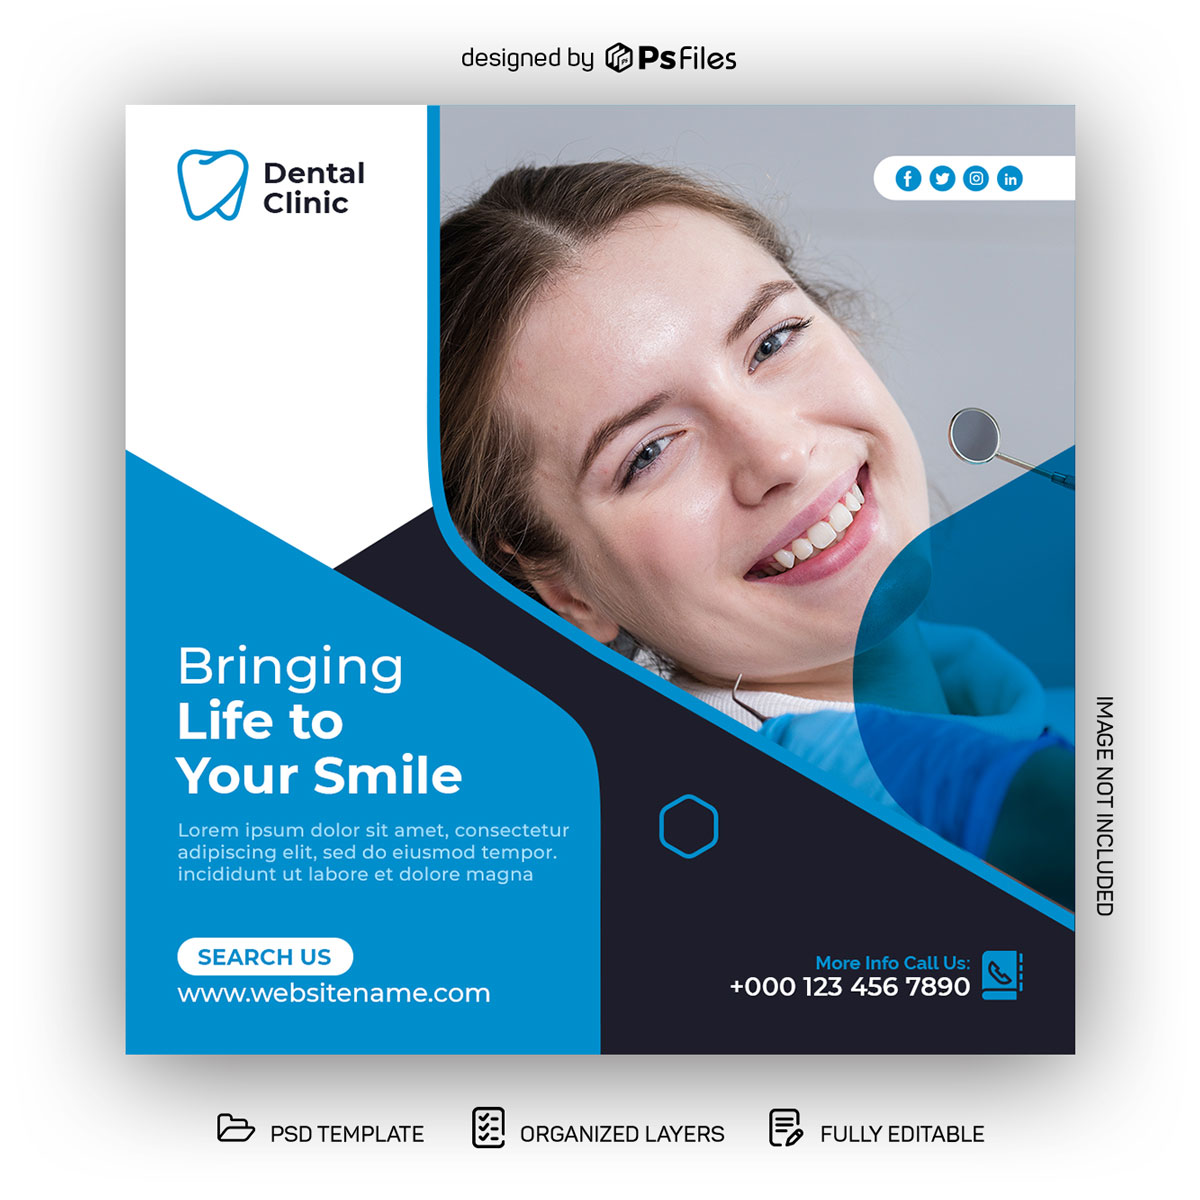 Blu Color Dental Clinic Social Media Poster Designs Free PSD Template